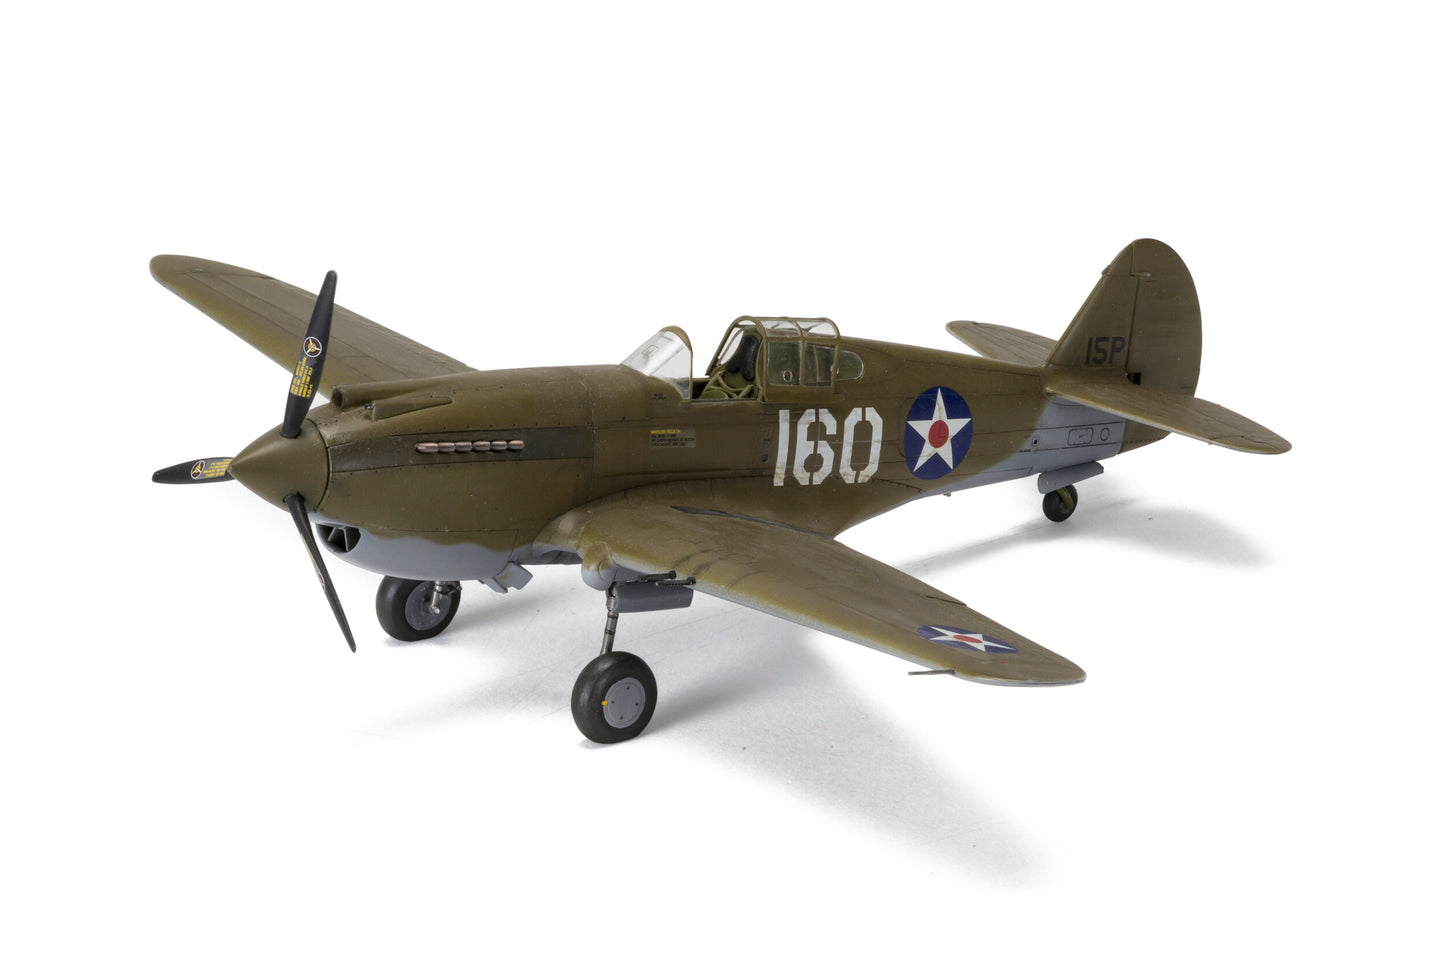 Airfix 1/48th scale Curtiss P-40B Warhawk